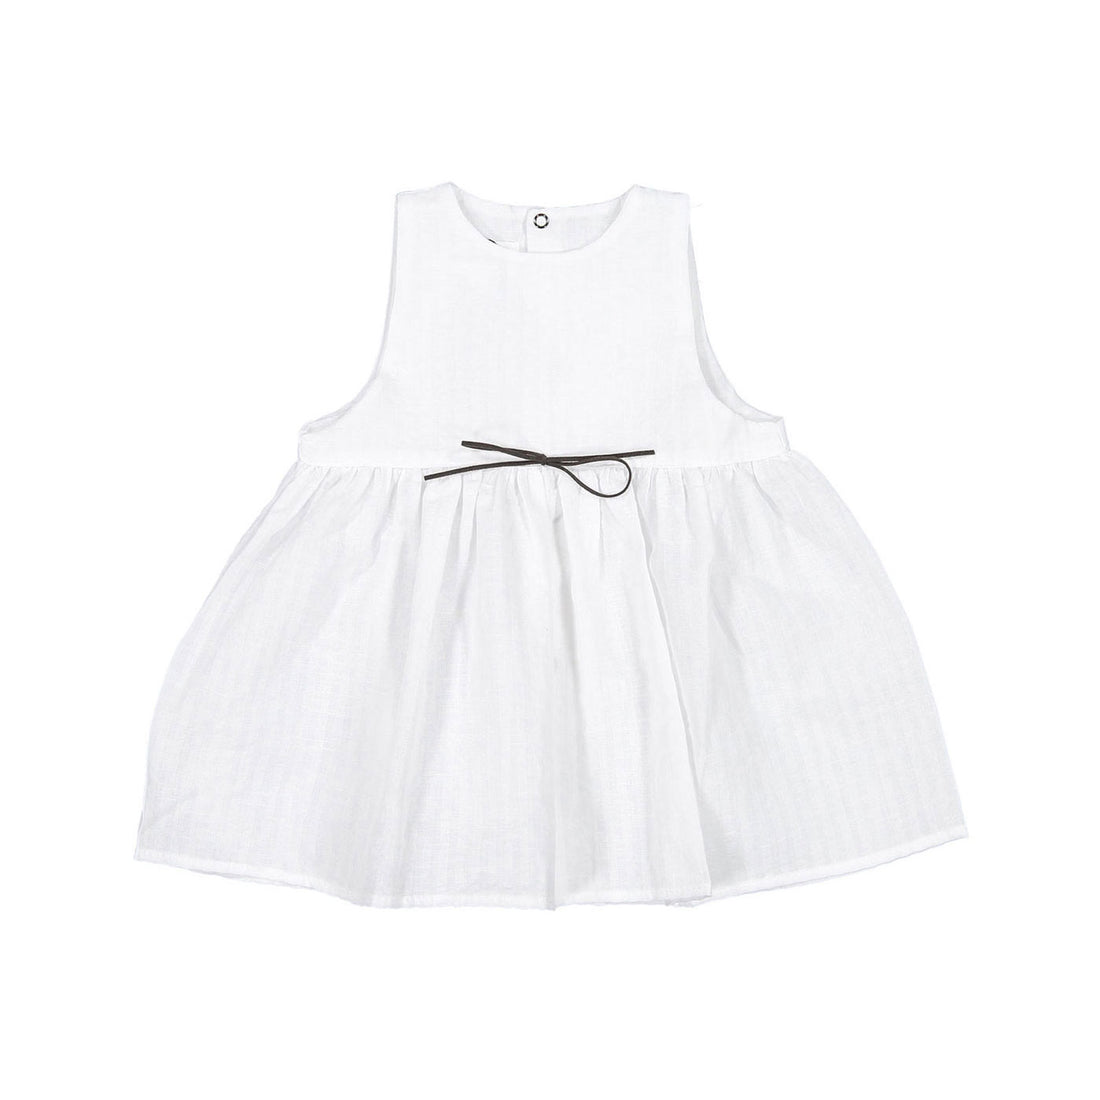 Pequeno TOCON White Plain Baby Dress